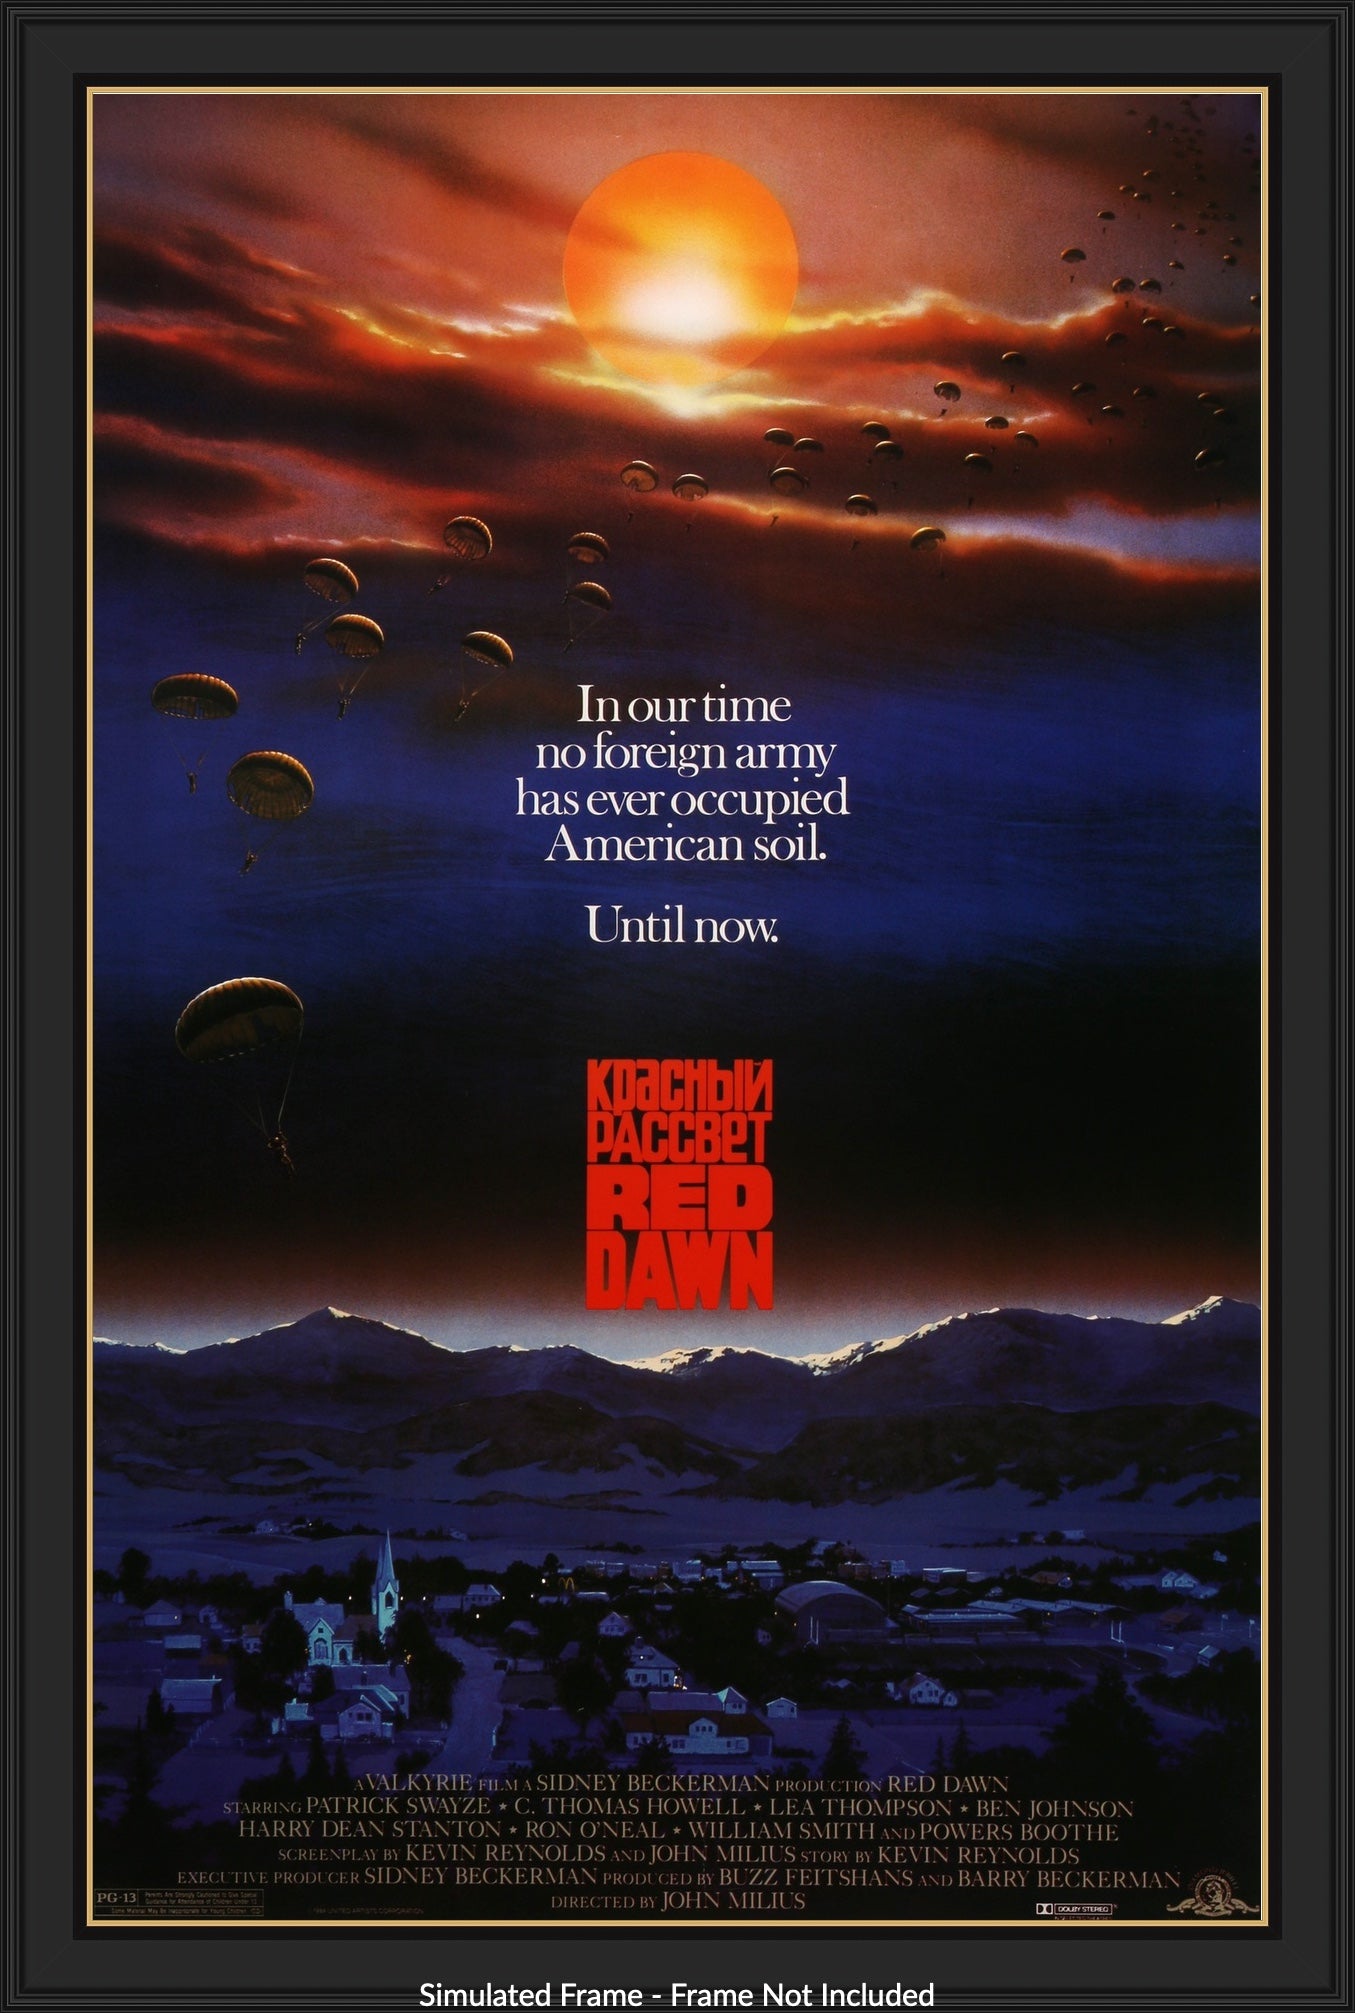 Red Dawn (1984) original movie poster for sale at Original Film Art